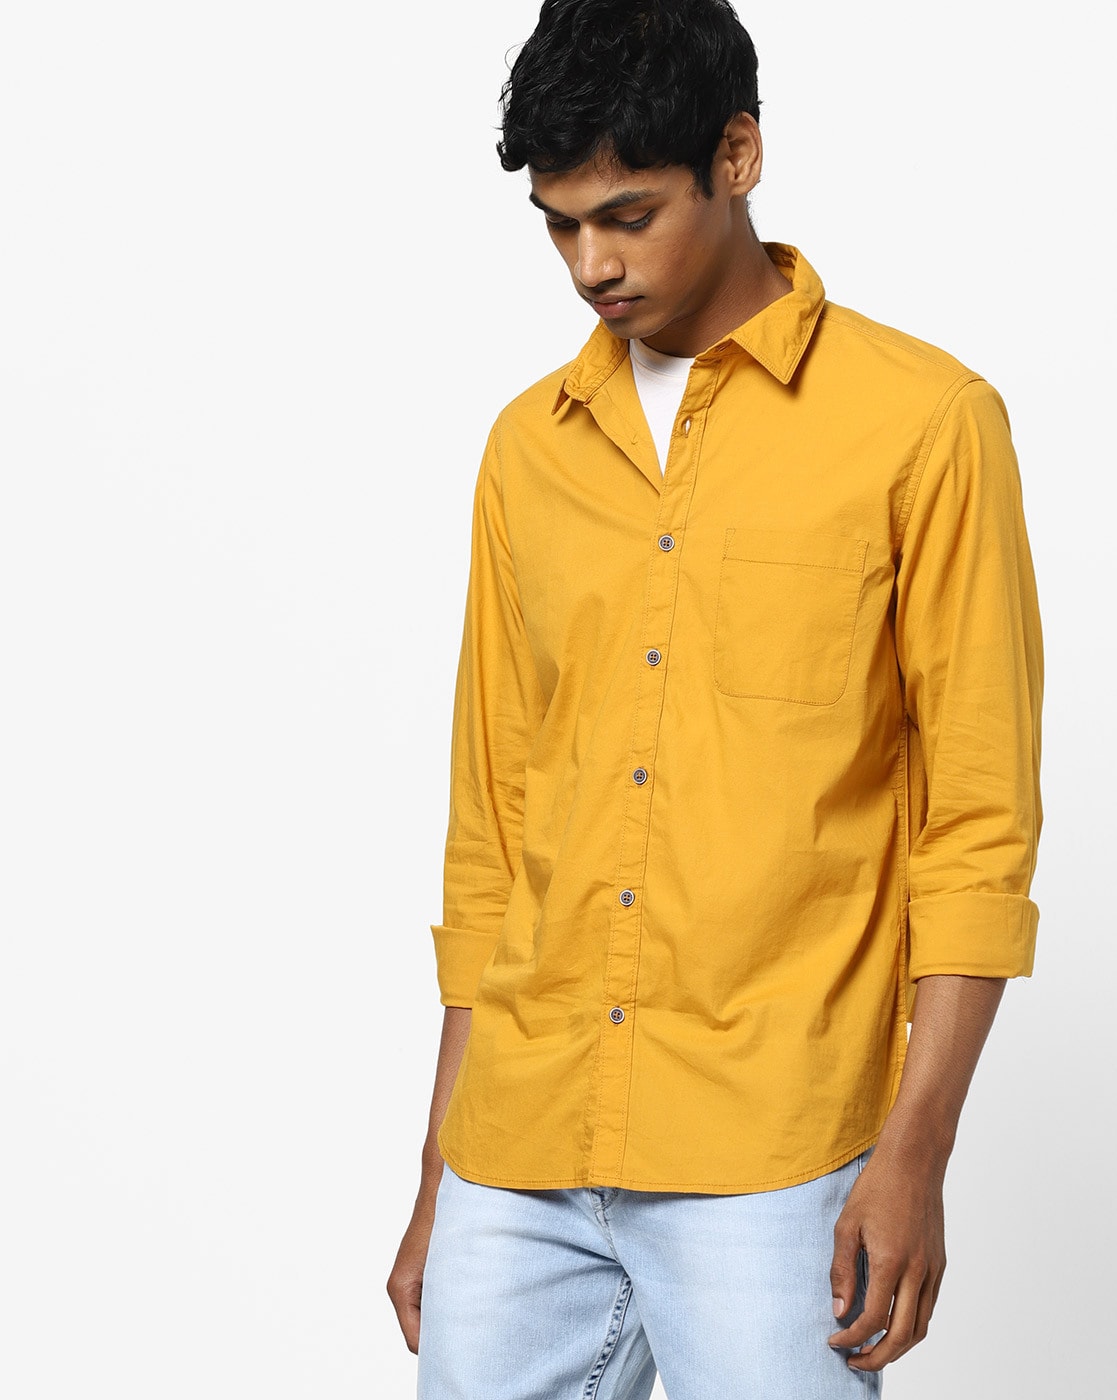 Mustard Yellow Colour Shirt | vlr.eng.br